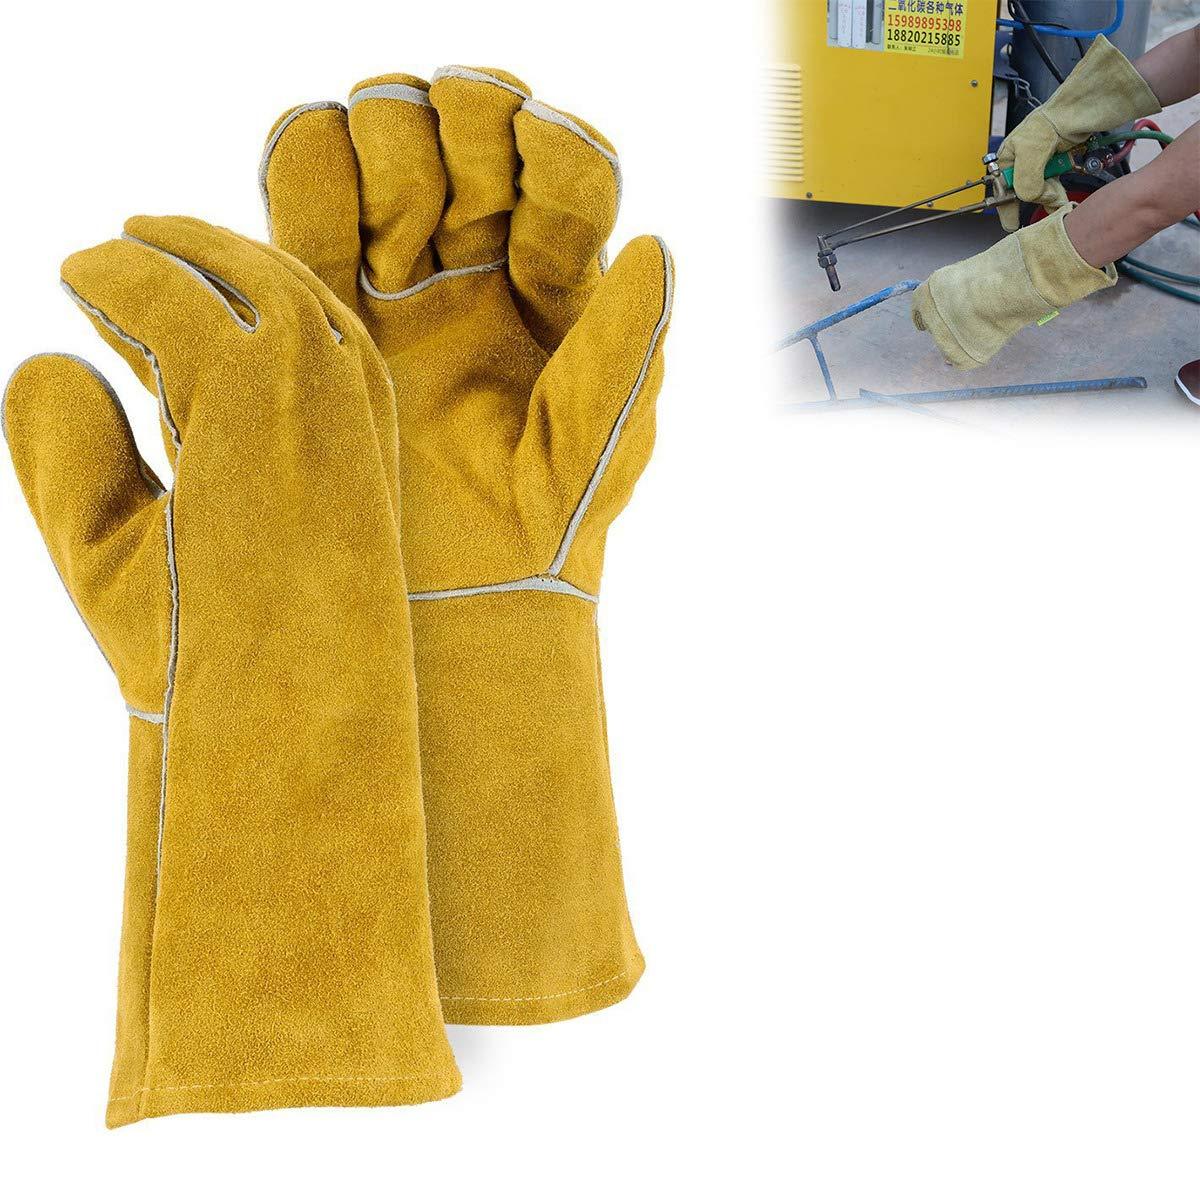 Protective Durable Heat Resistant Welding Gloves